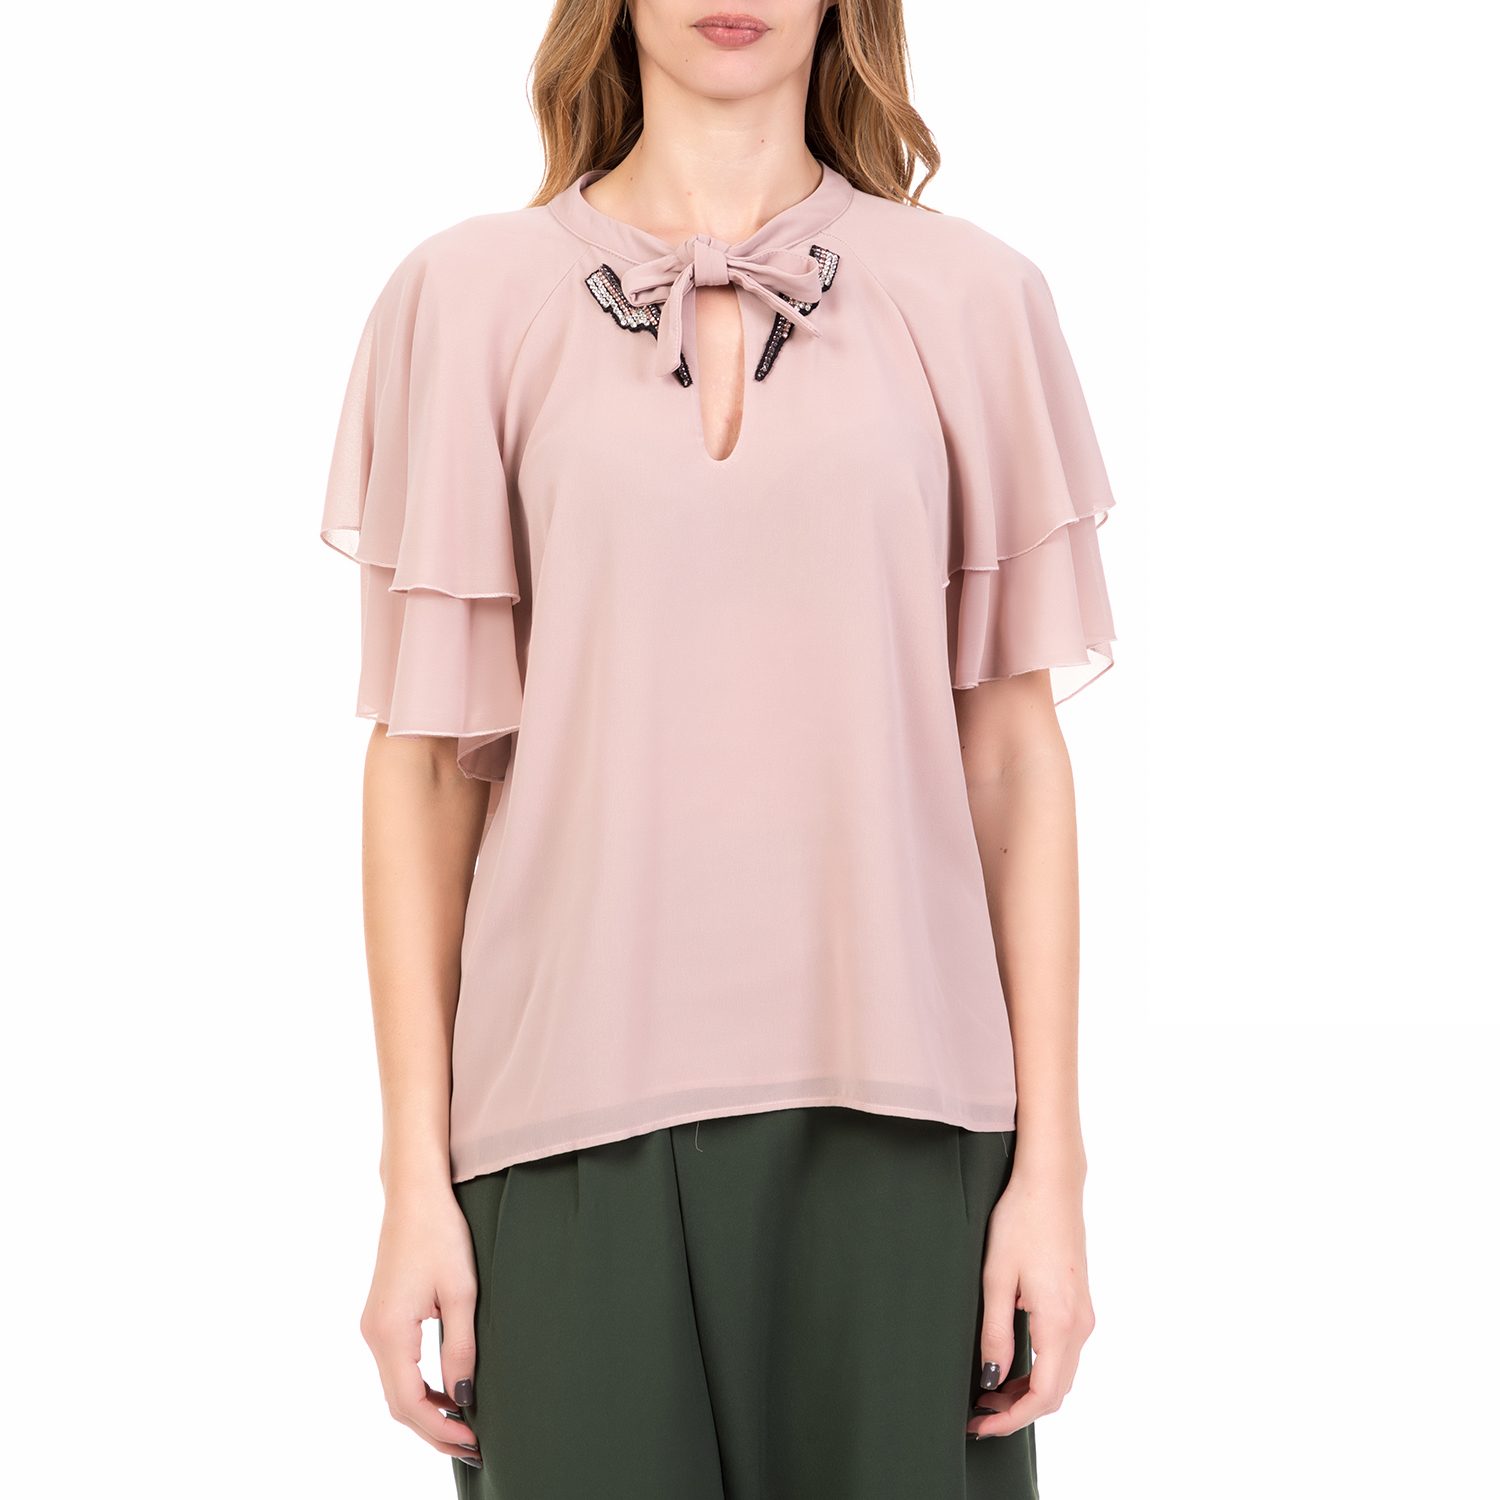 SILVIAN HEACH - Γυναικεία κοντομάνικη μπλούζα CUMMINS SILVIAN HEACH ροζ Γυναικεία/Ρούχα/Μπλούζες/Κοντομάνικες